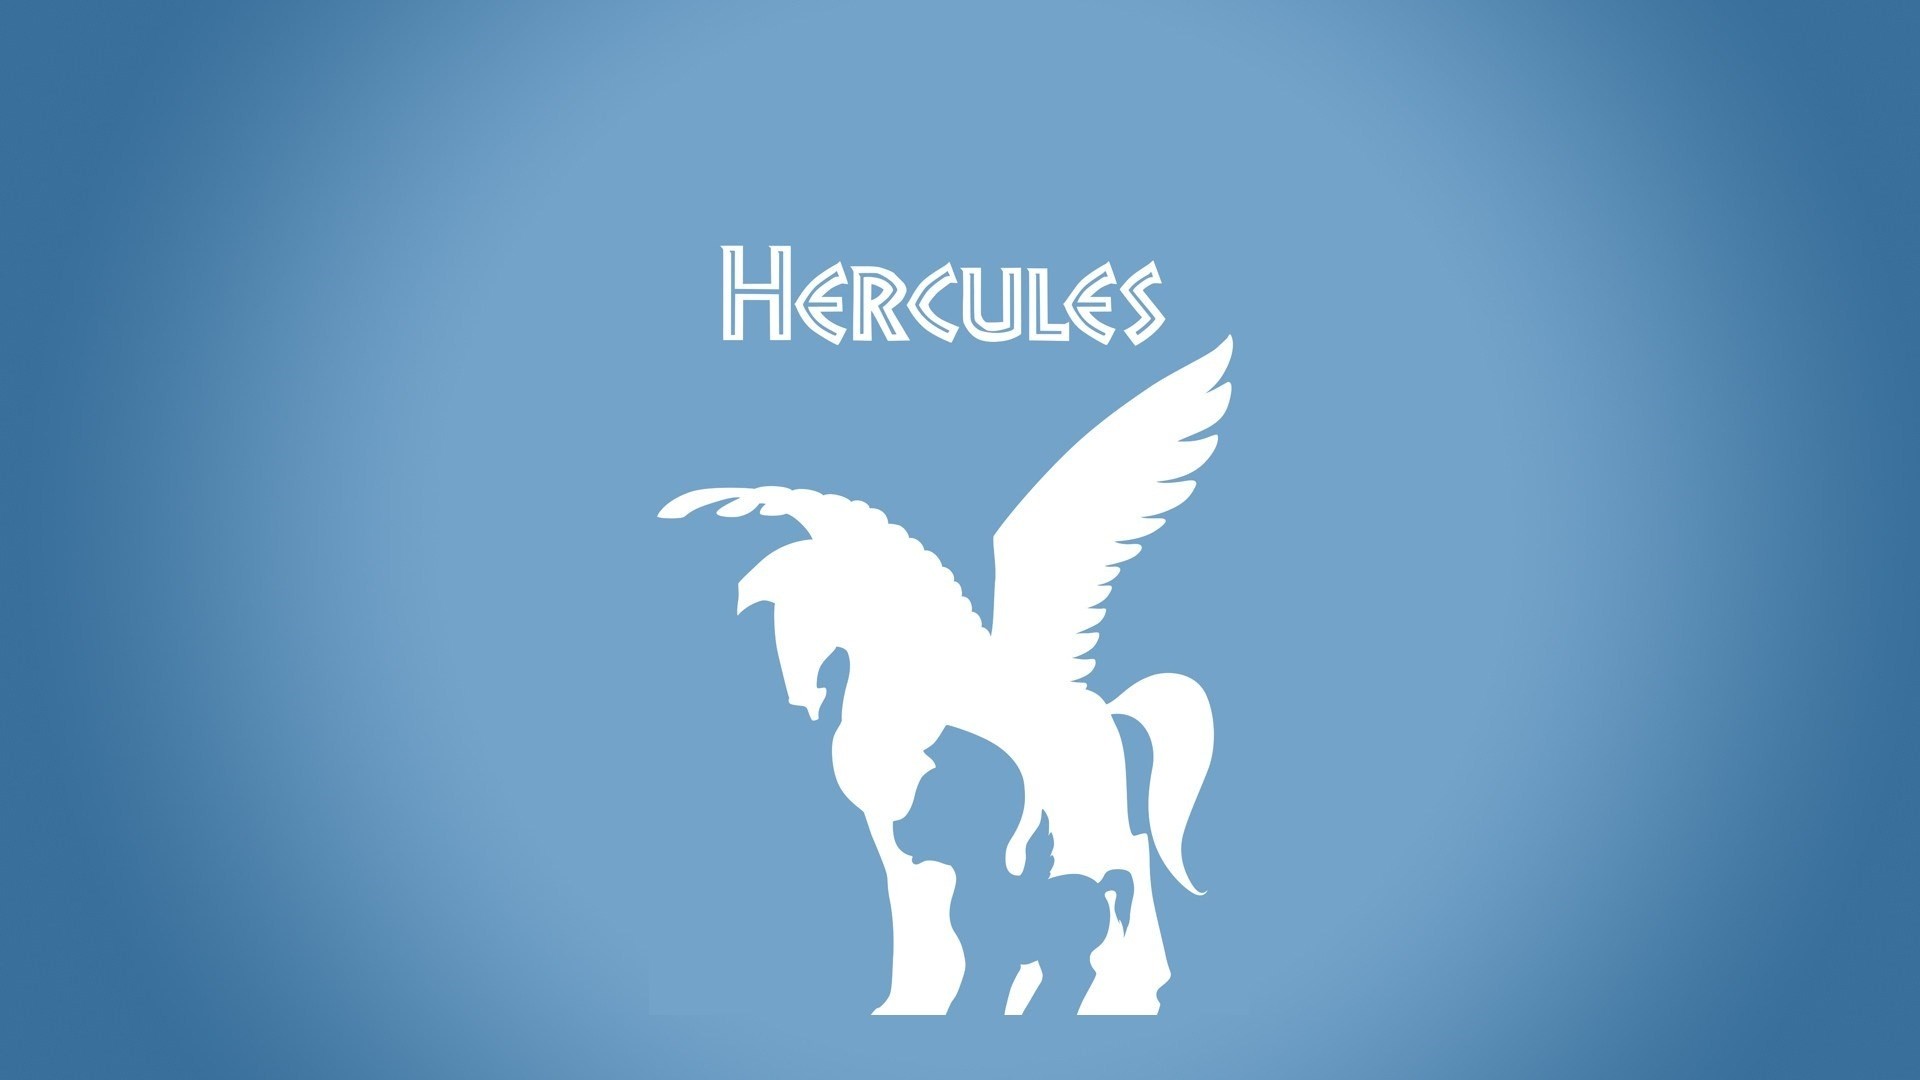 1920x1080 Hercules Disney | 1920 x 1080 | Download | Close